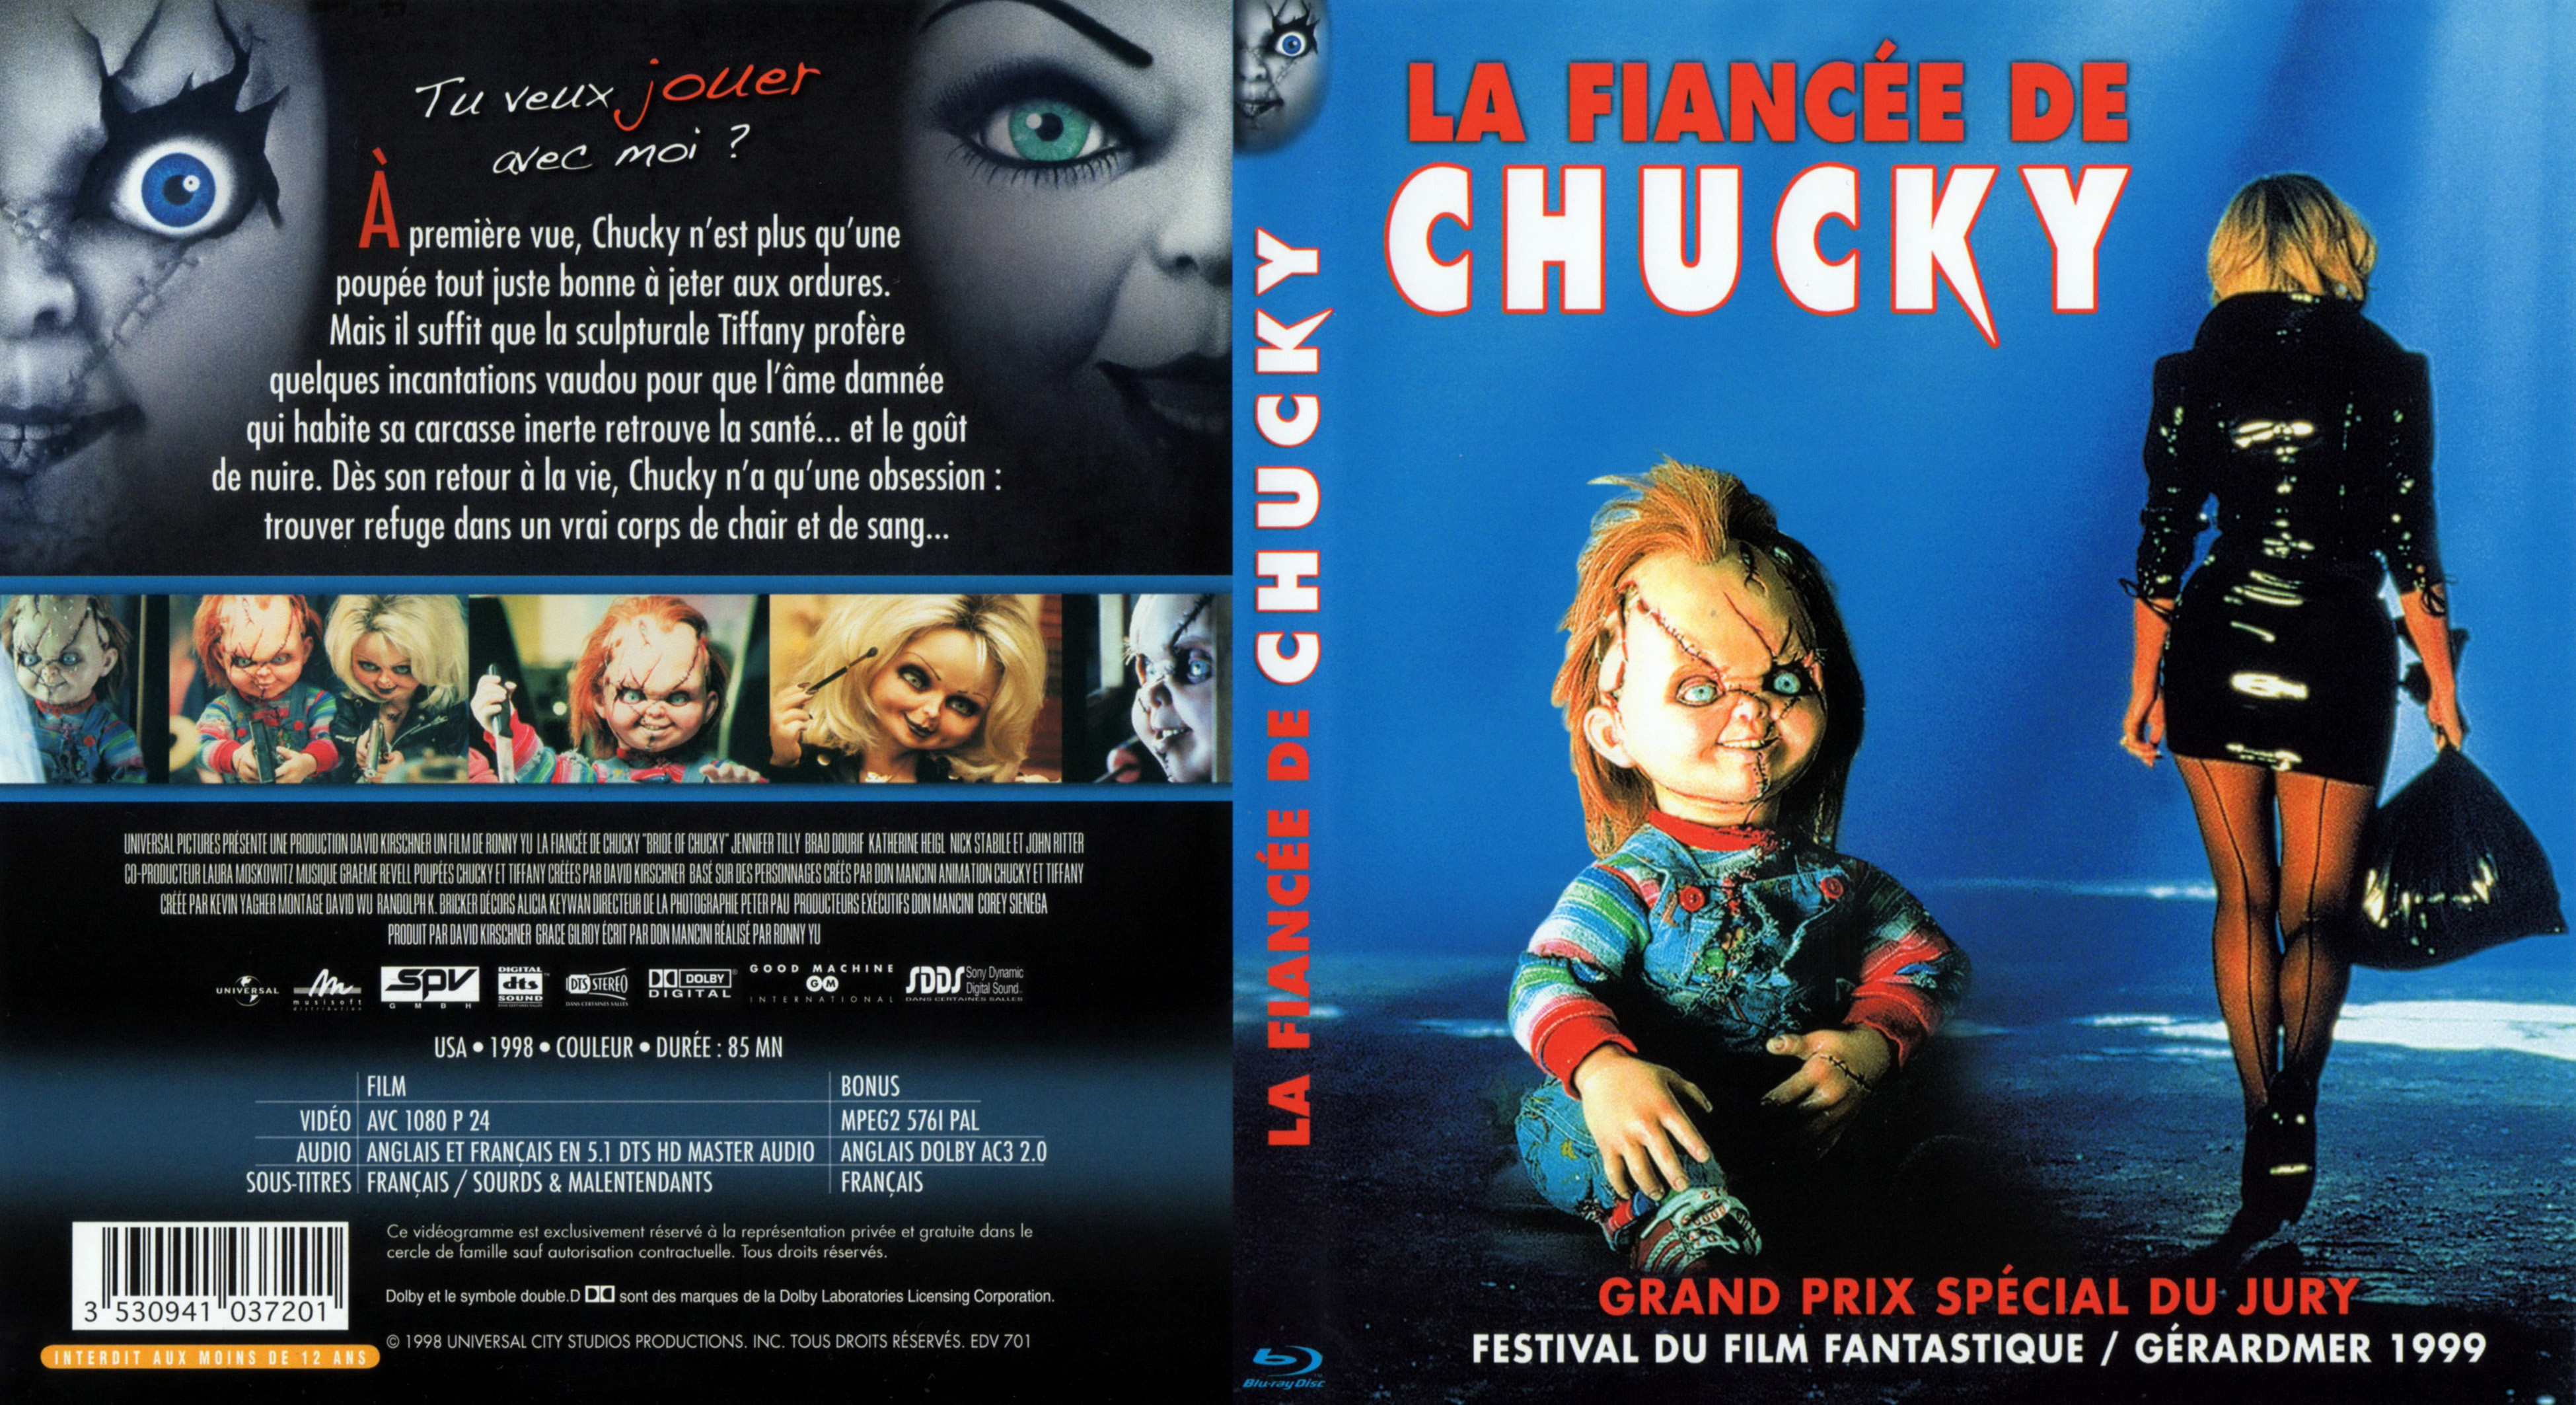 Jaquette DVD La fiance de Chucky (BLU-RAY)